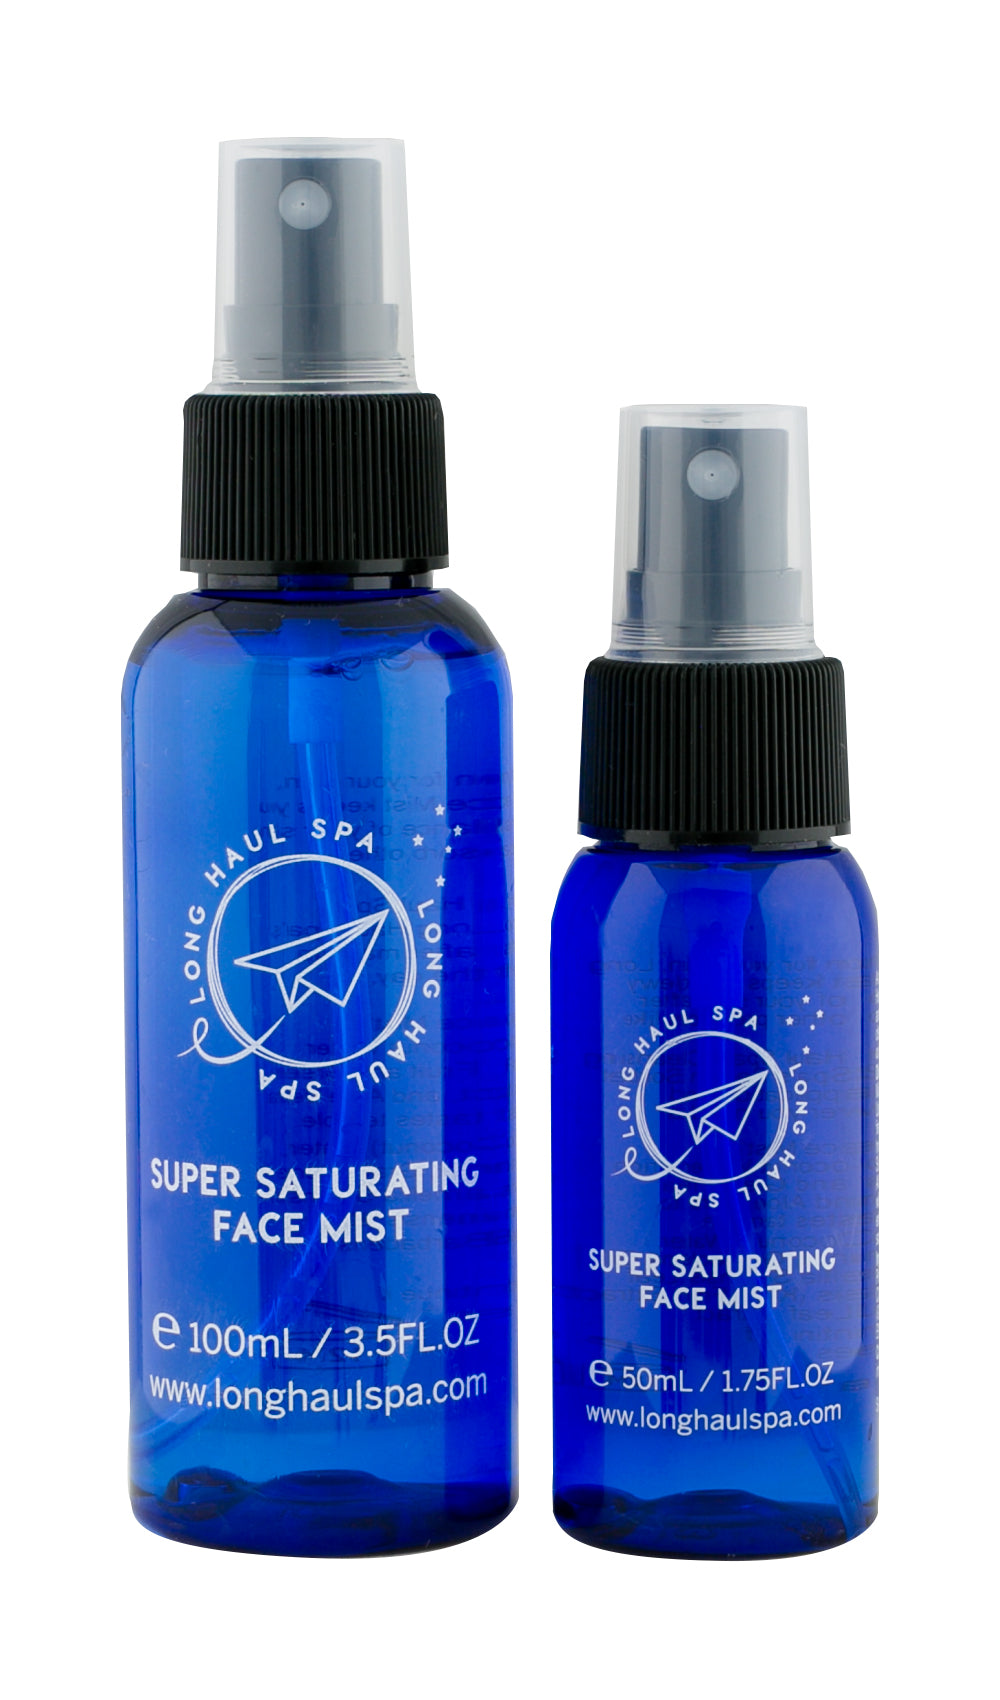 Super Saturating Face Mist